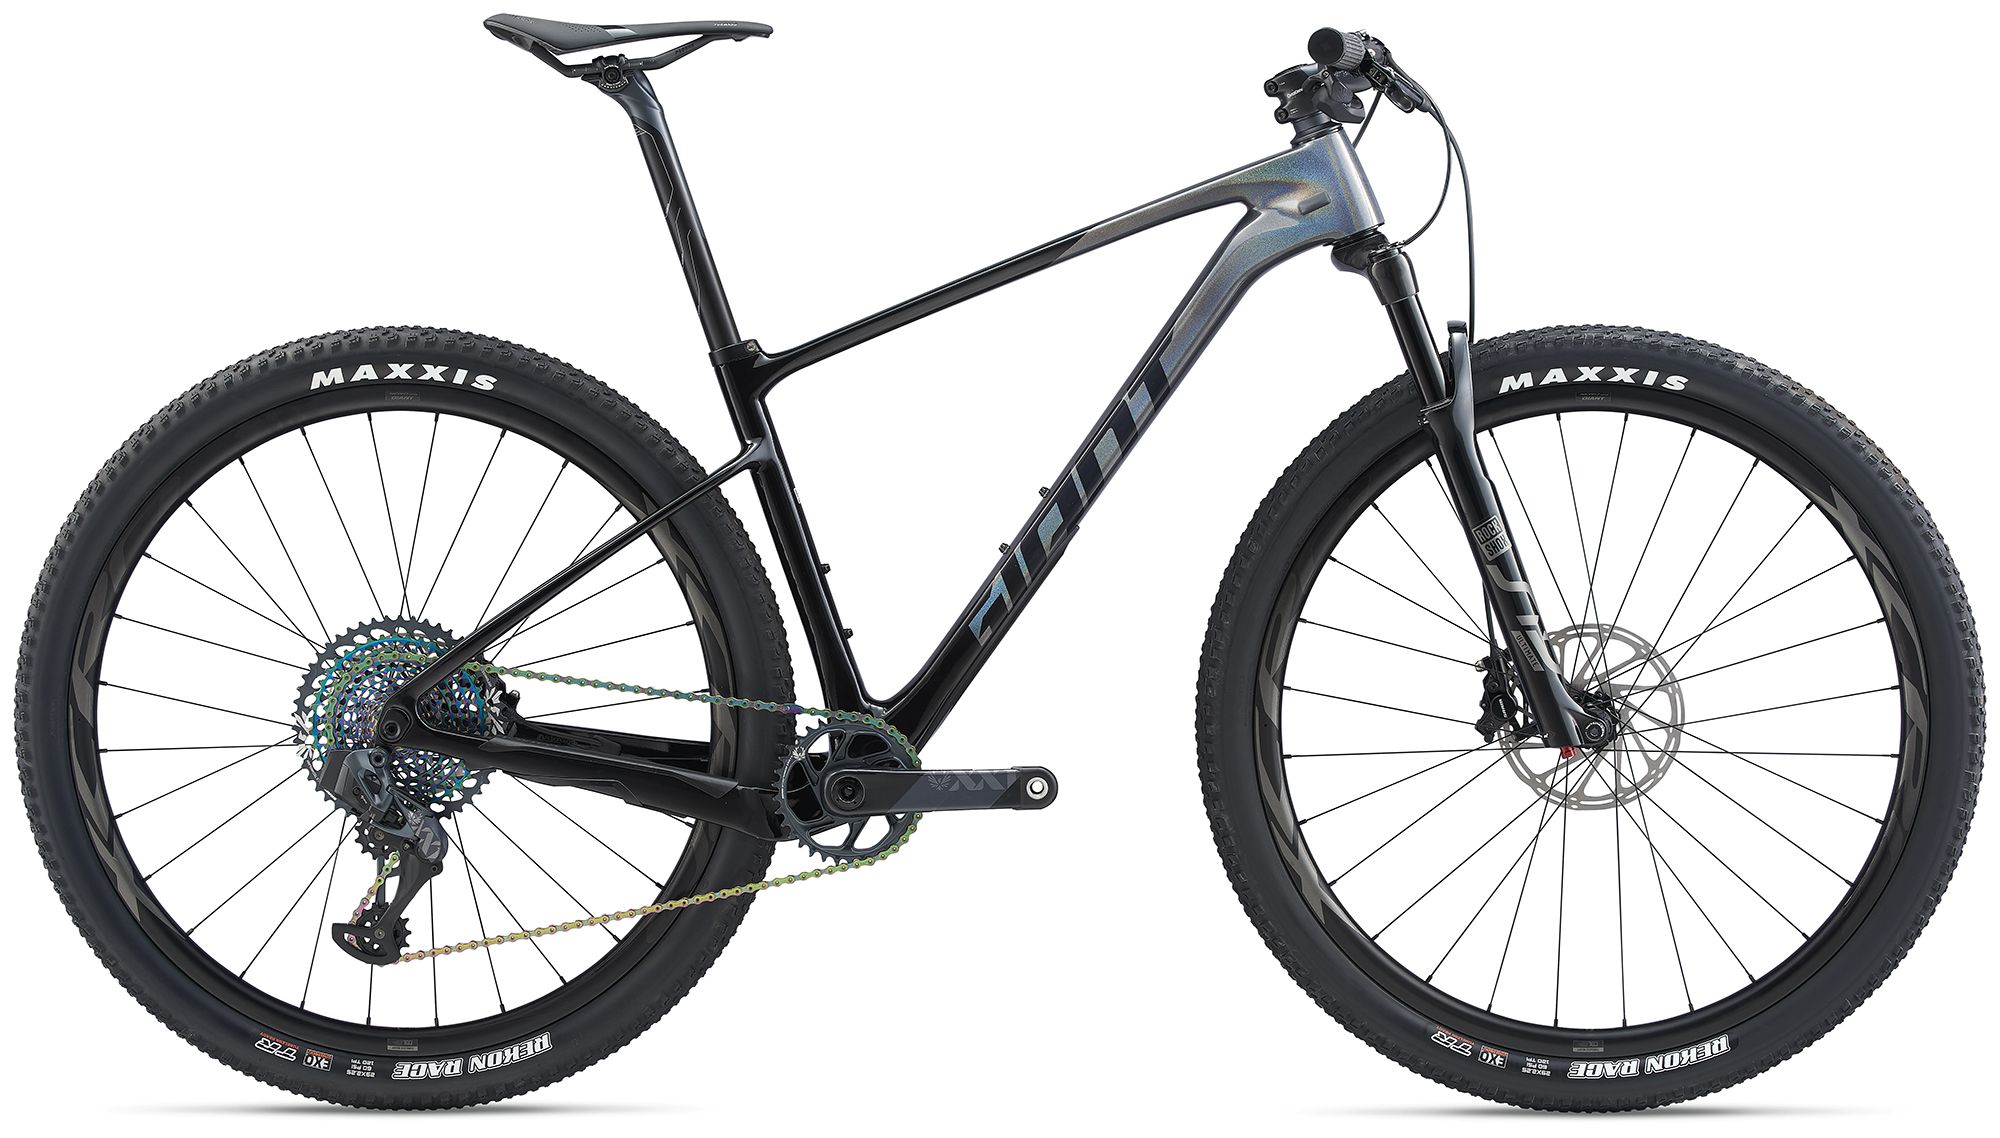  Giant  Xtc Advanced SL 0 29er  Mountain  Bike  2022 7998 99 